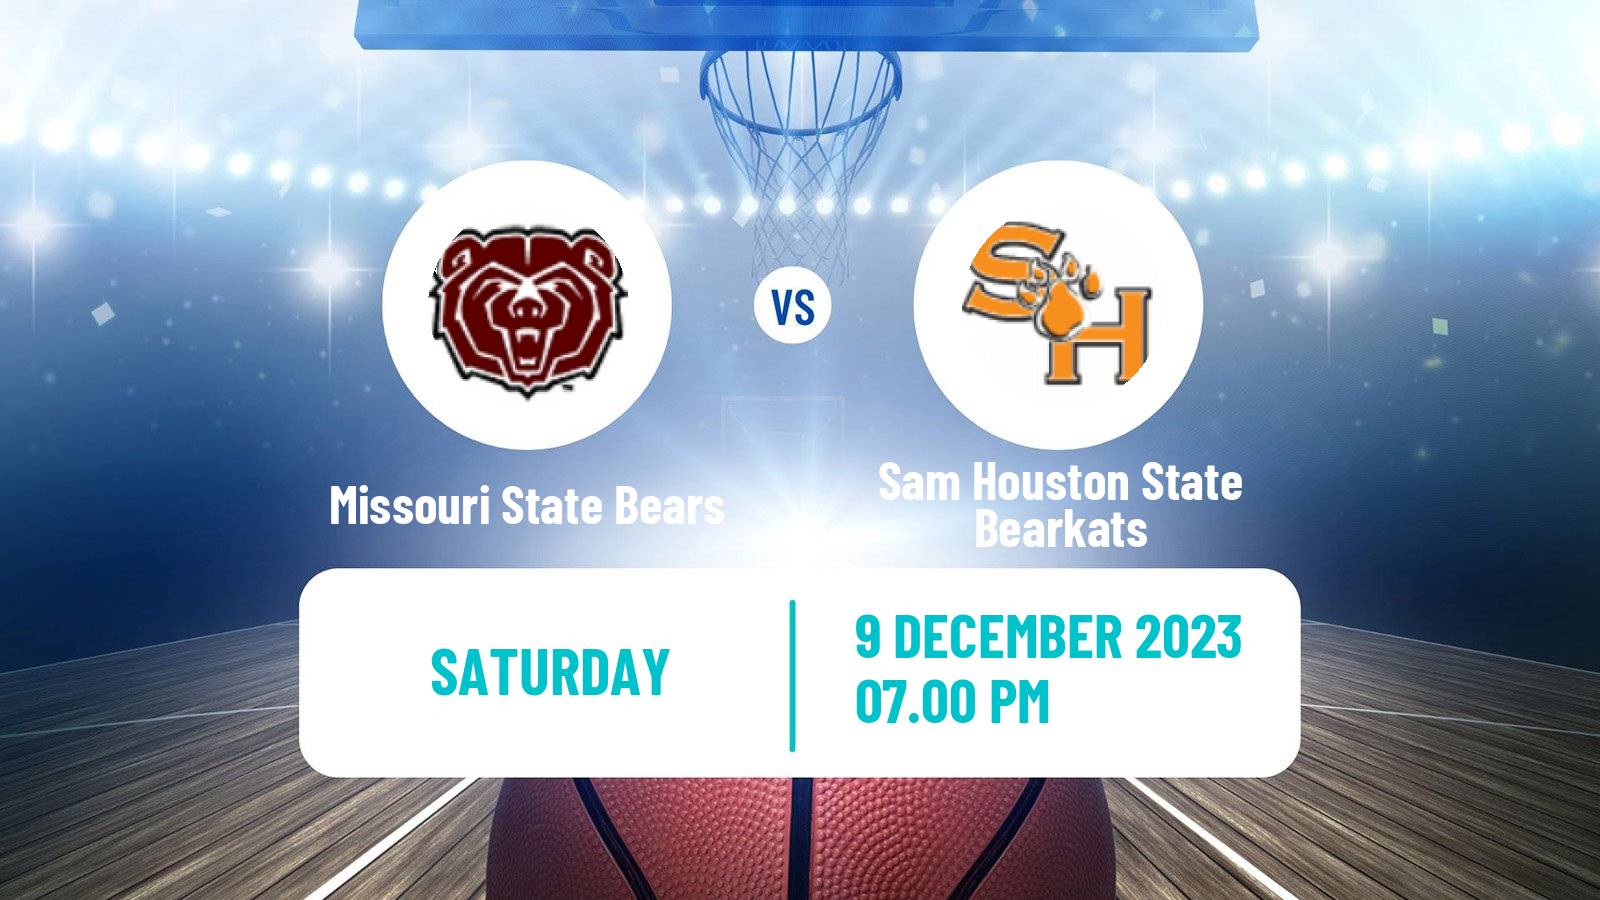 Basketball NCAA College Basketball Missouri State Bears - Sam Houston State Bearkats